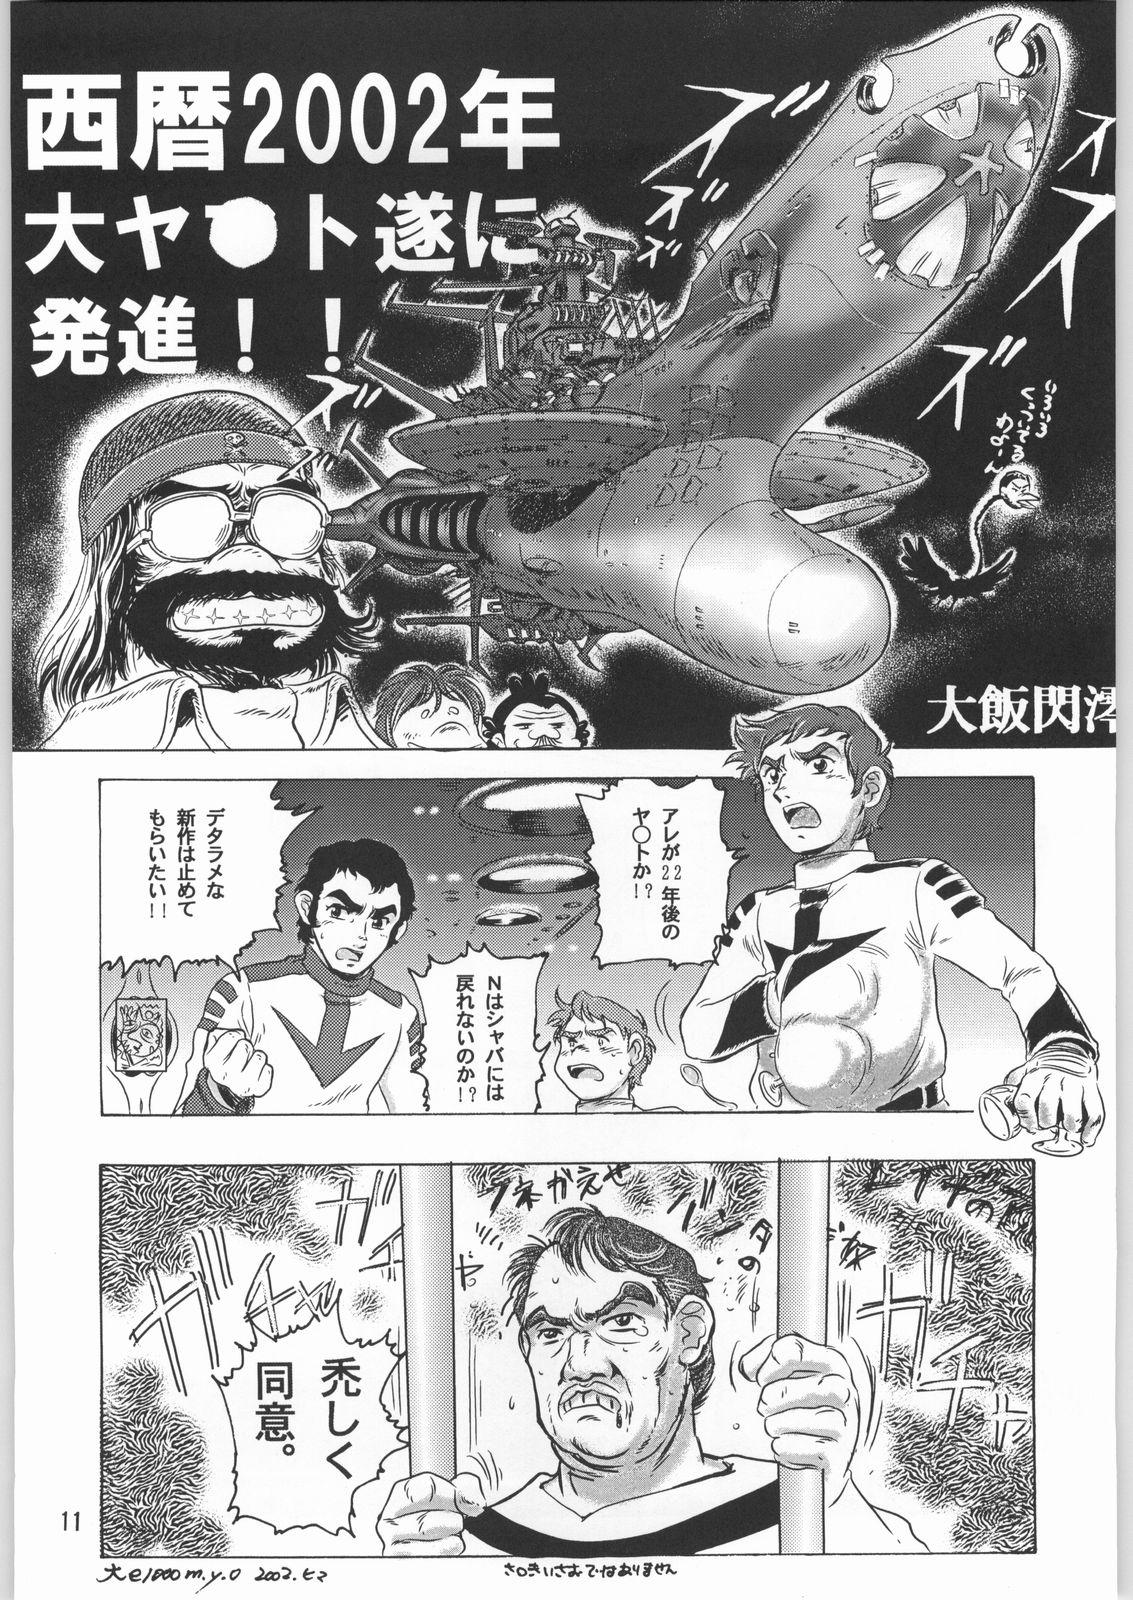 Safadinha Megaton Punch 1 - Space battleship yamato Chobits Pareja - Page 10